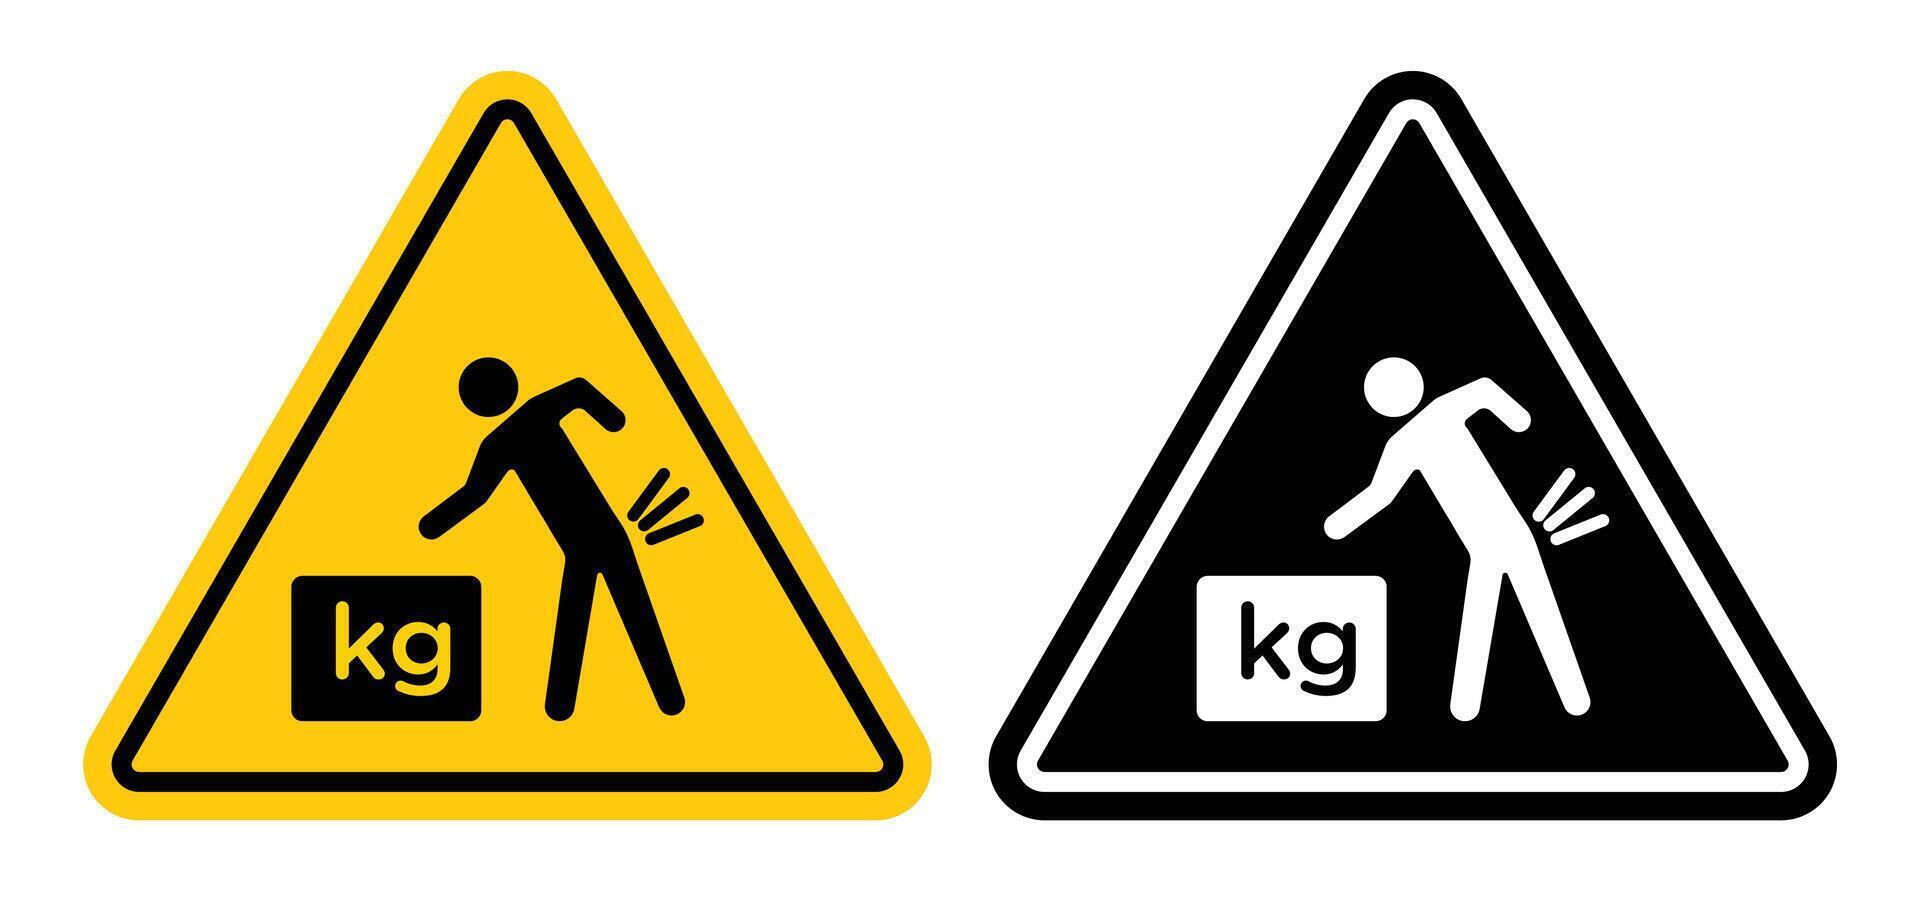 Warning heavy object sign vector